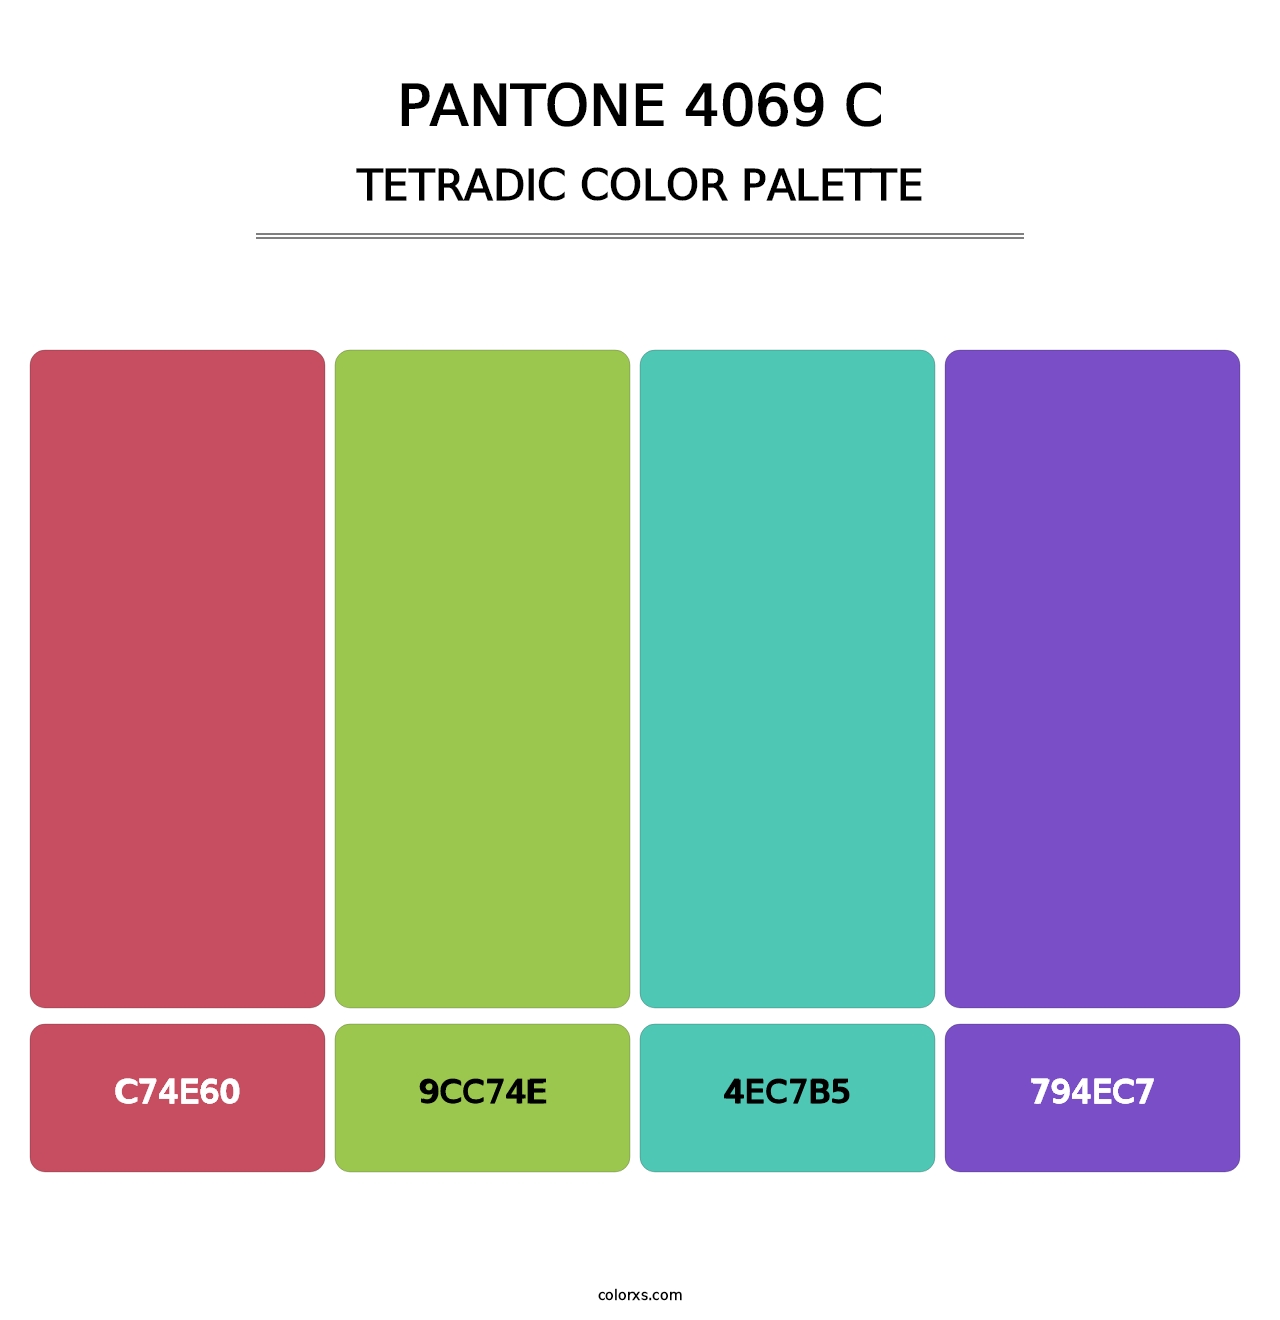 PANTONE 4069 C - Tetradic Color Palette